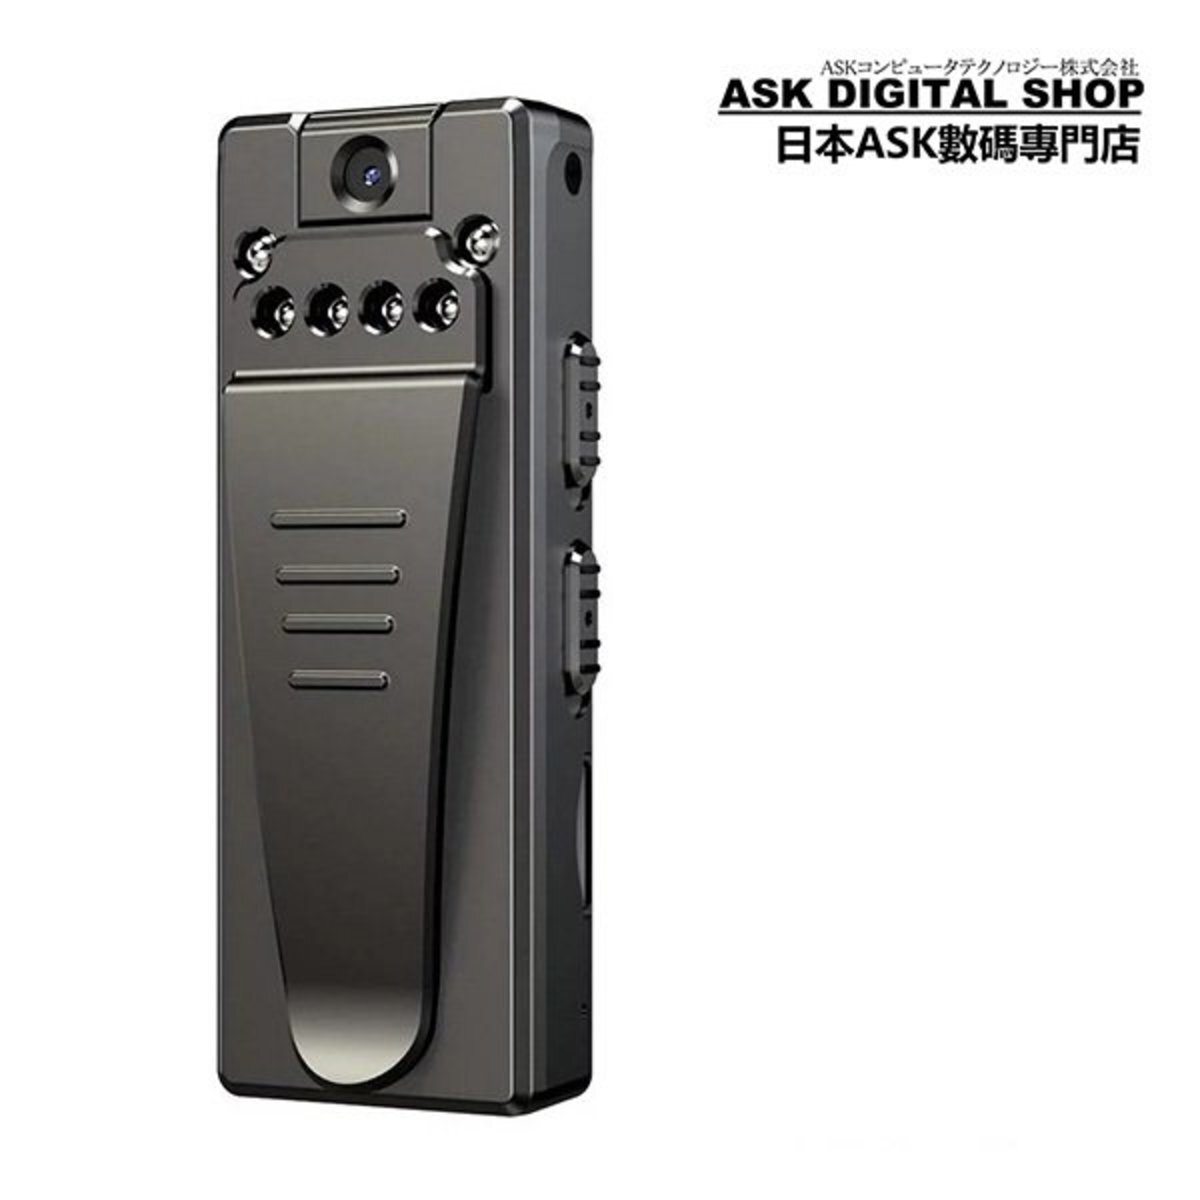 Portable Mini Camcorder DVR Digital Video Recorder P3422